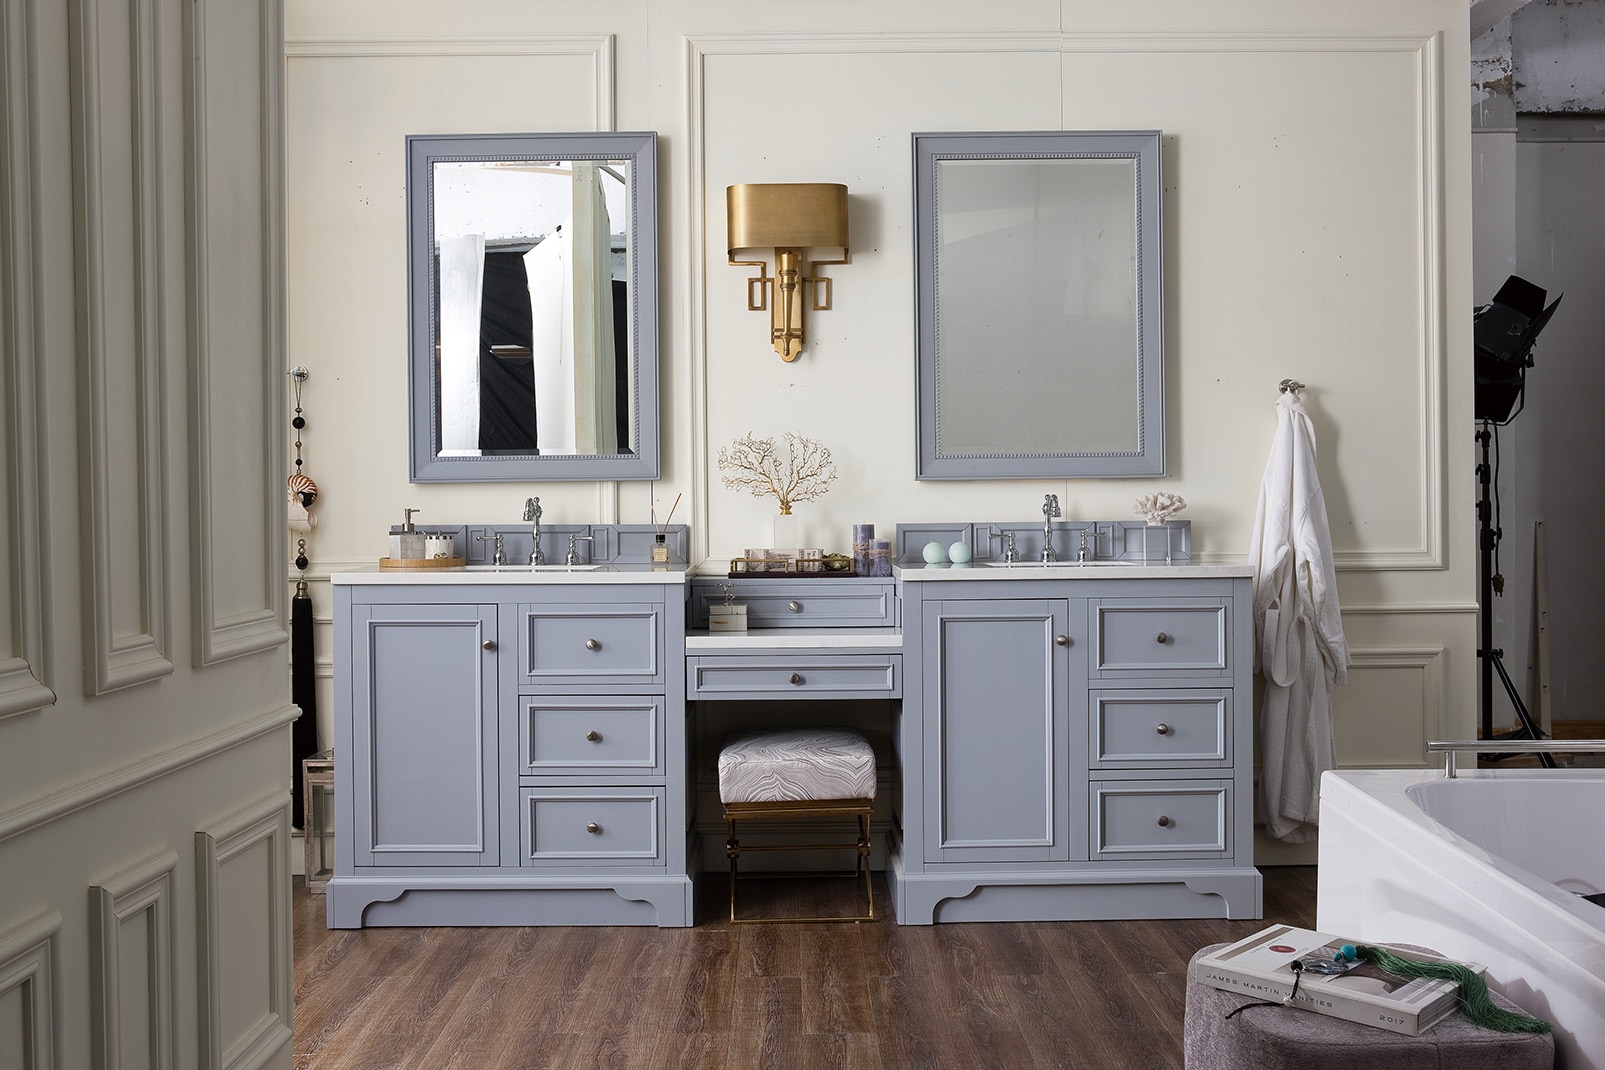 94 de Soto Double Bathroom Vanity with Makeup Counter, Bright White